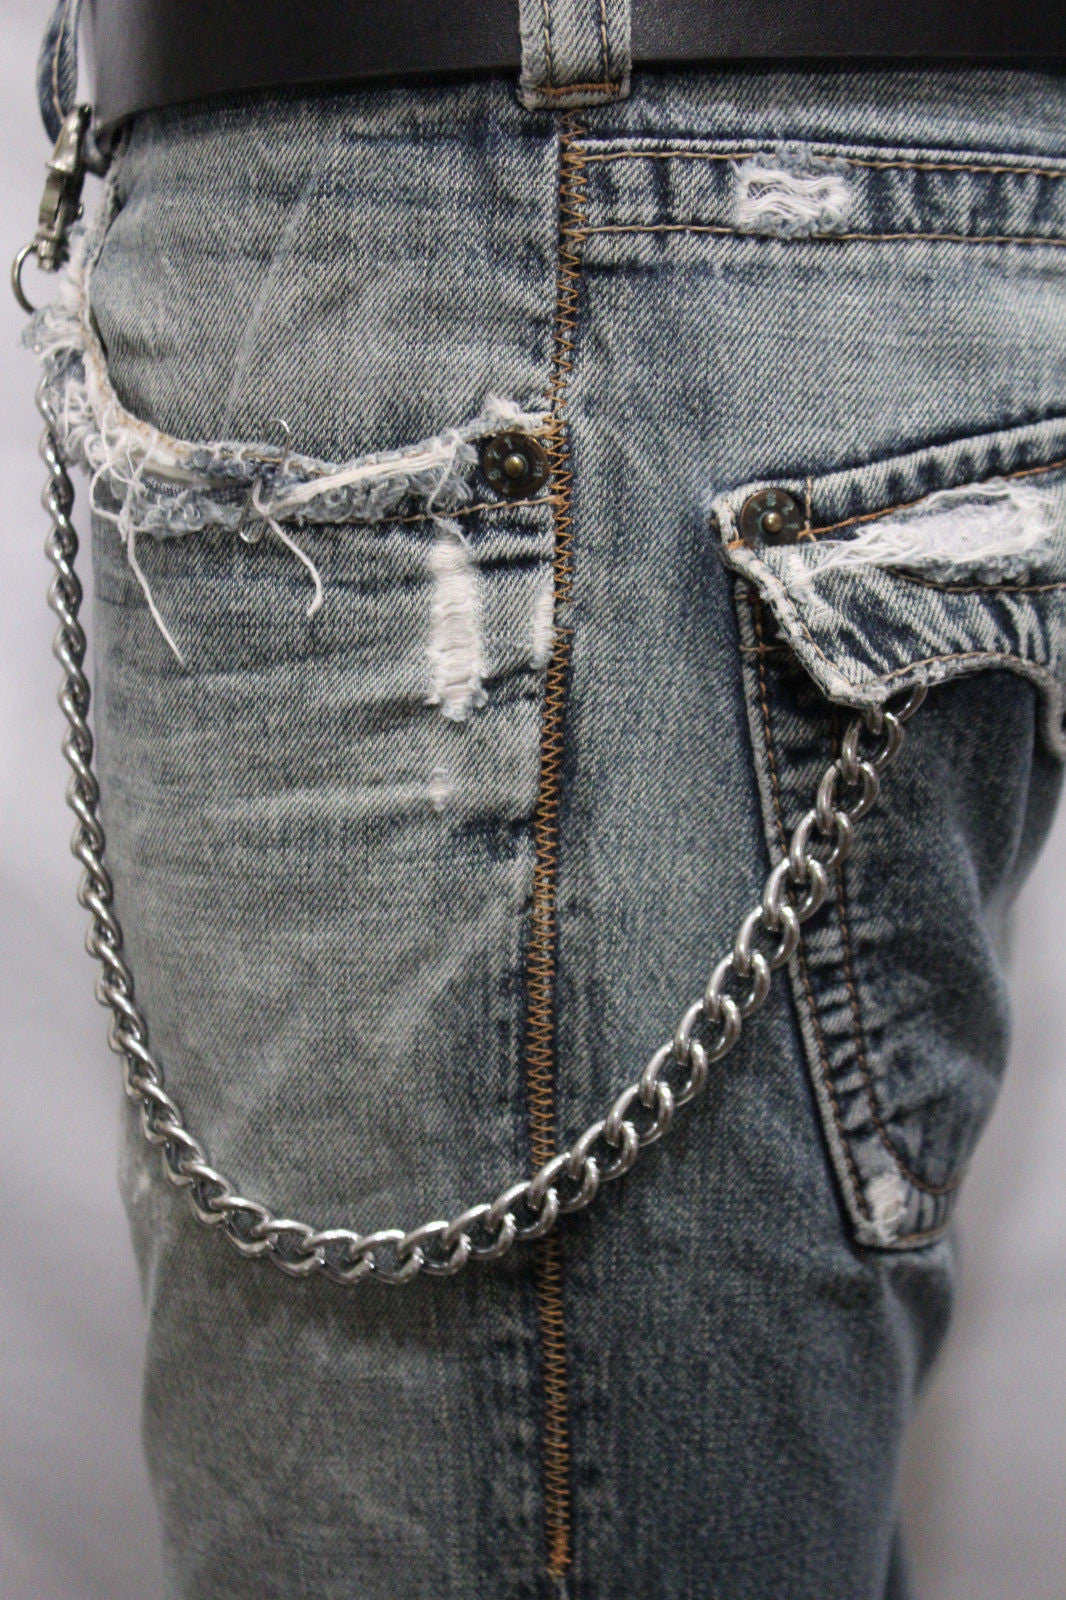 Men Silver Metal Wallet Chains Links KeyChain Jeans Biker Big